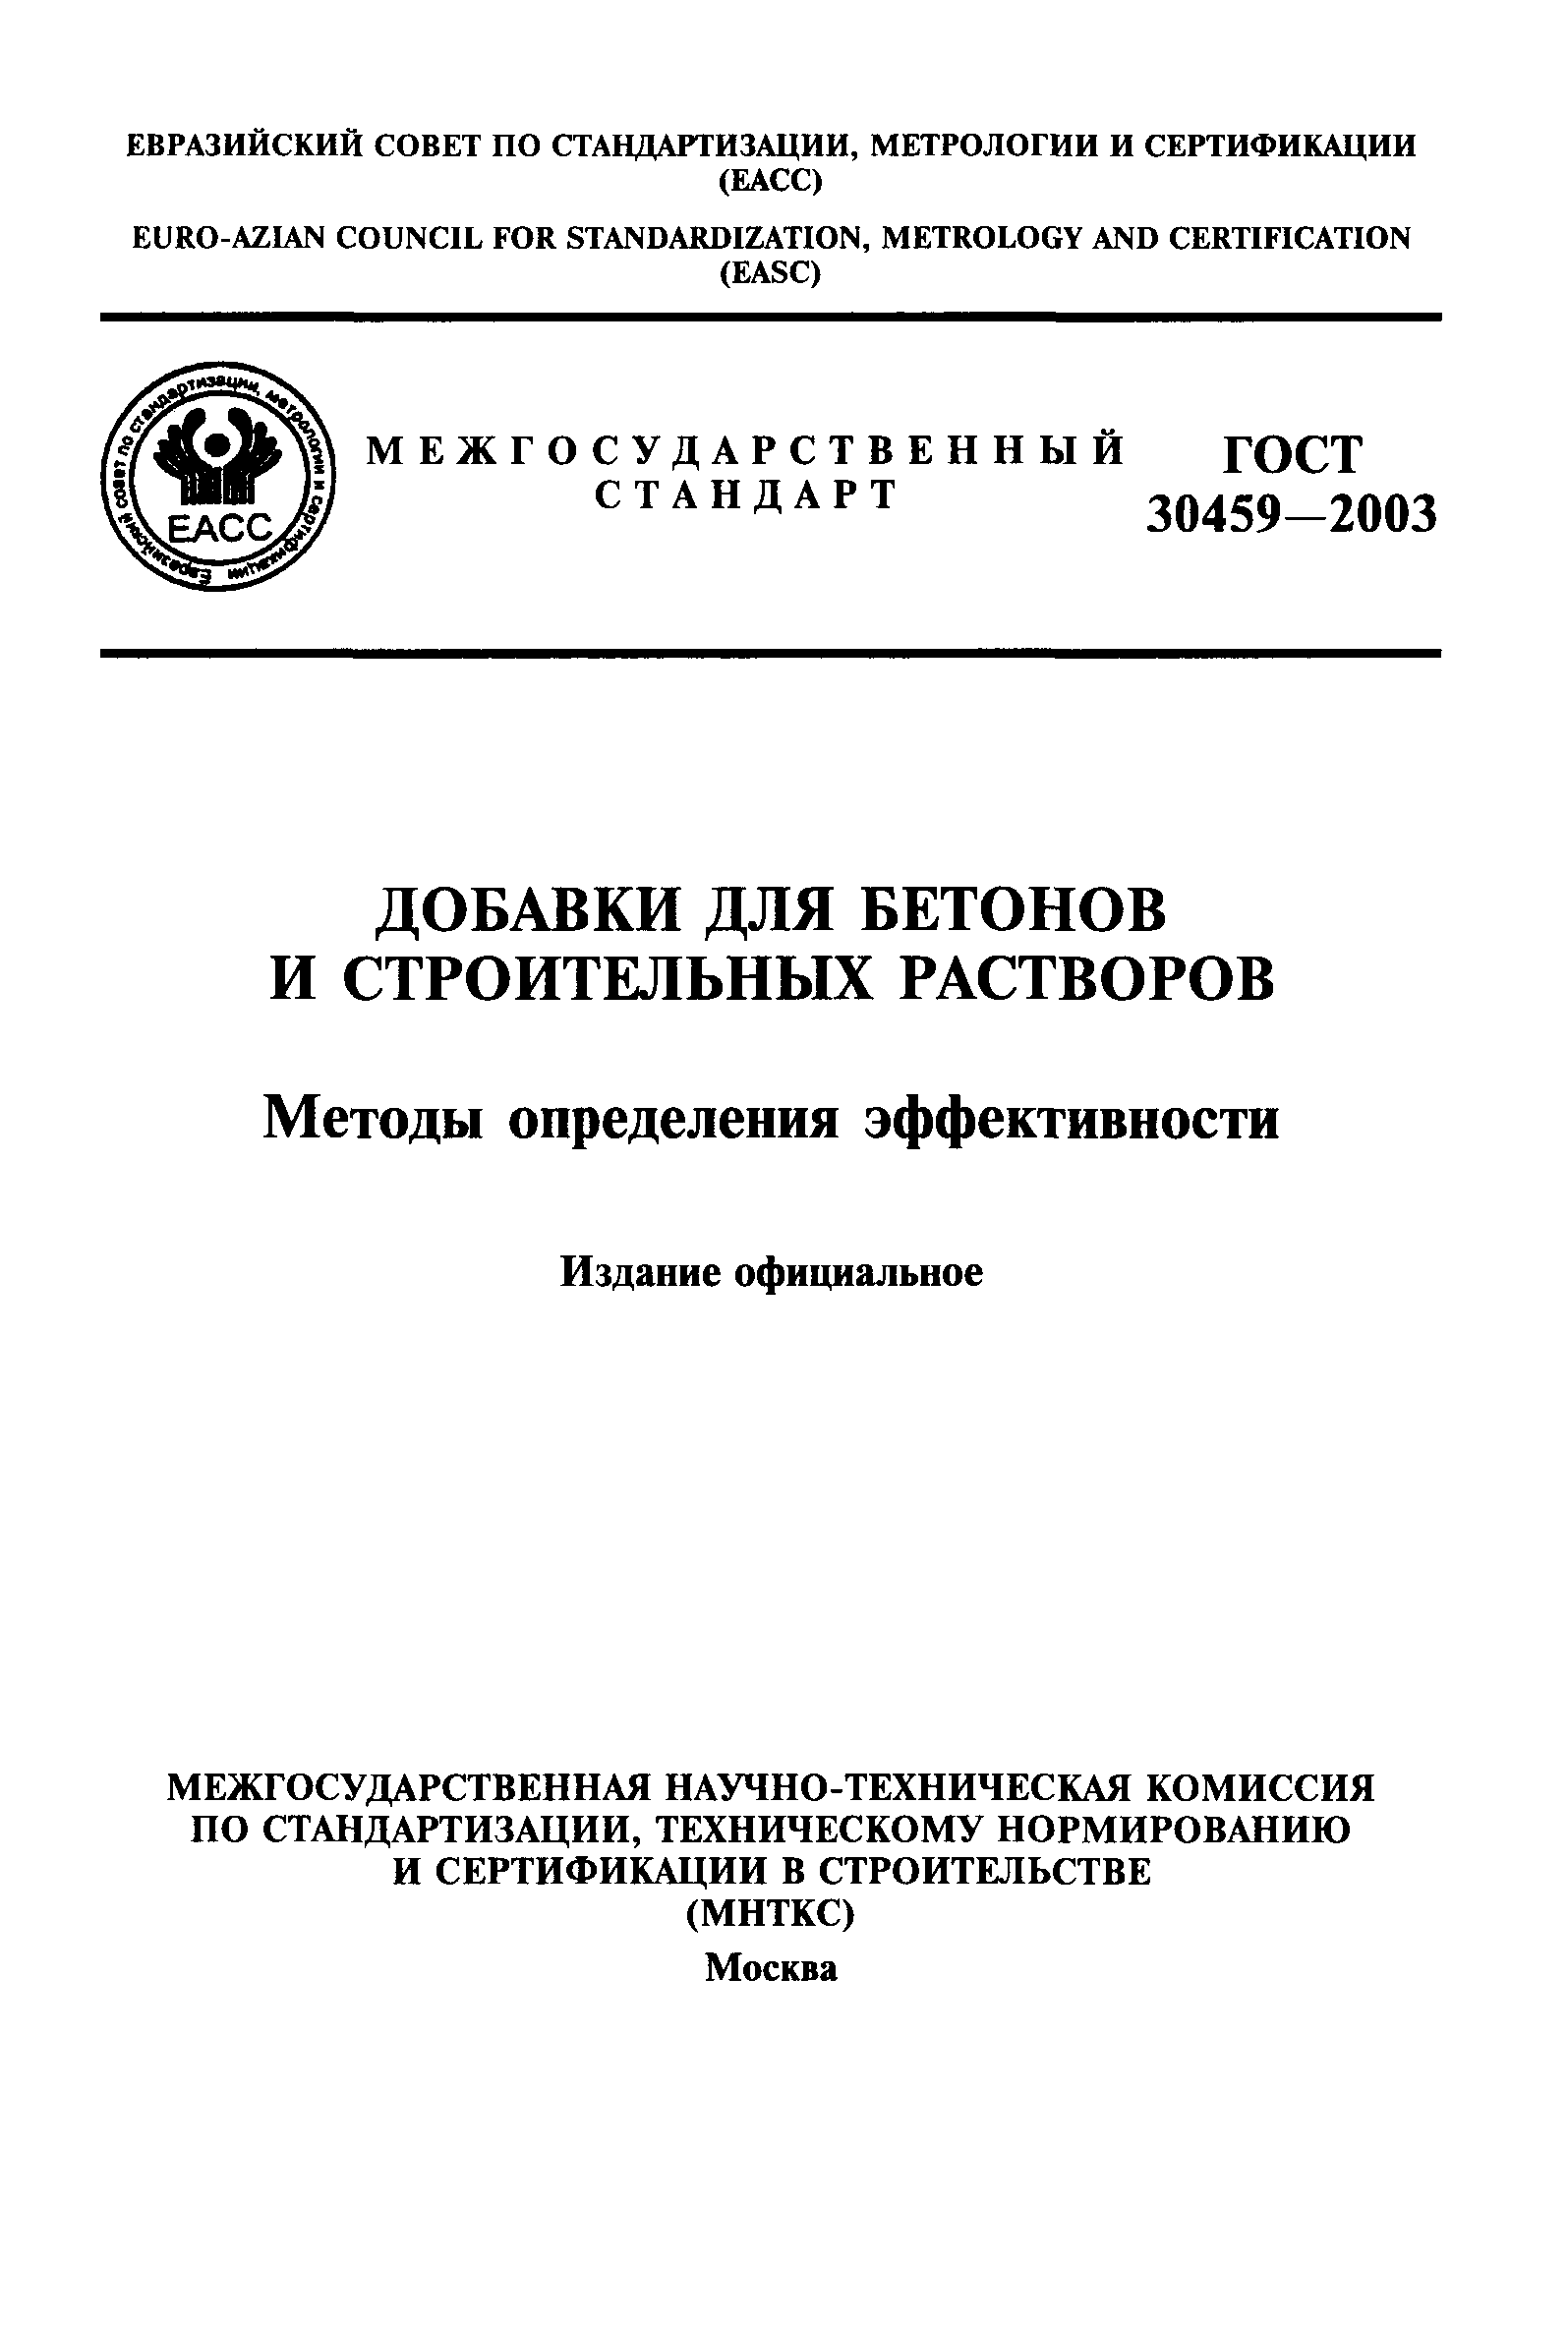 ГОСТ 30459-2003